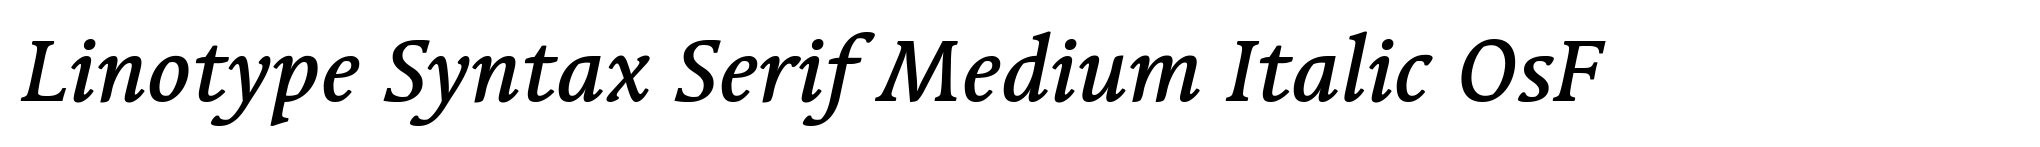 Linotype Syntax Serif Medium Italic OsF image